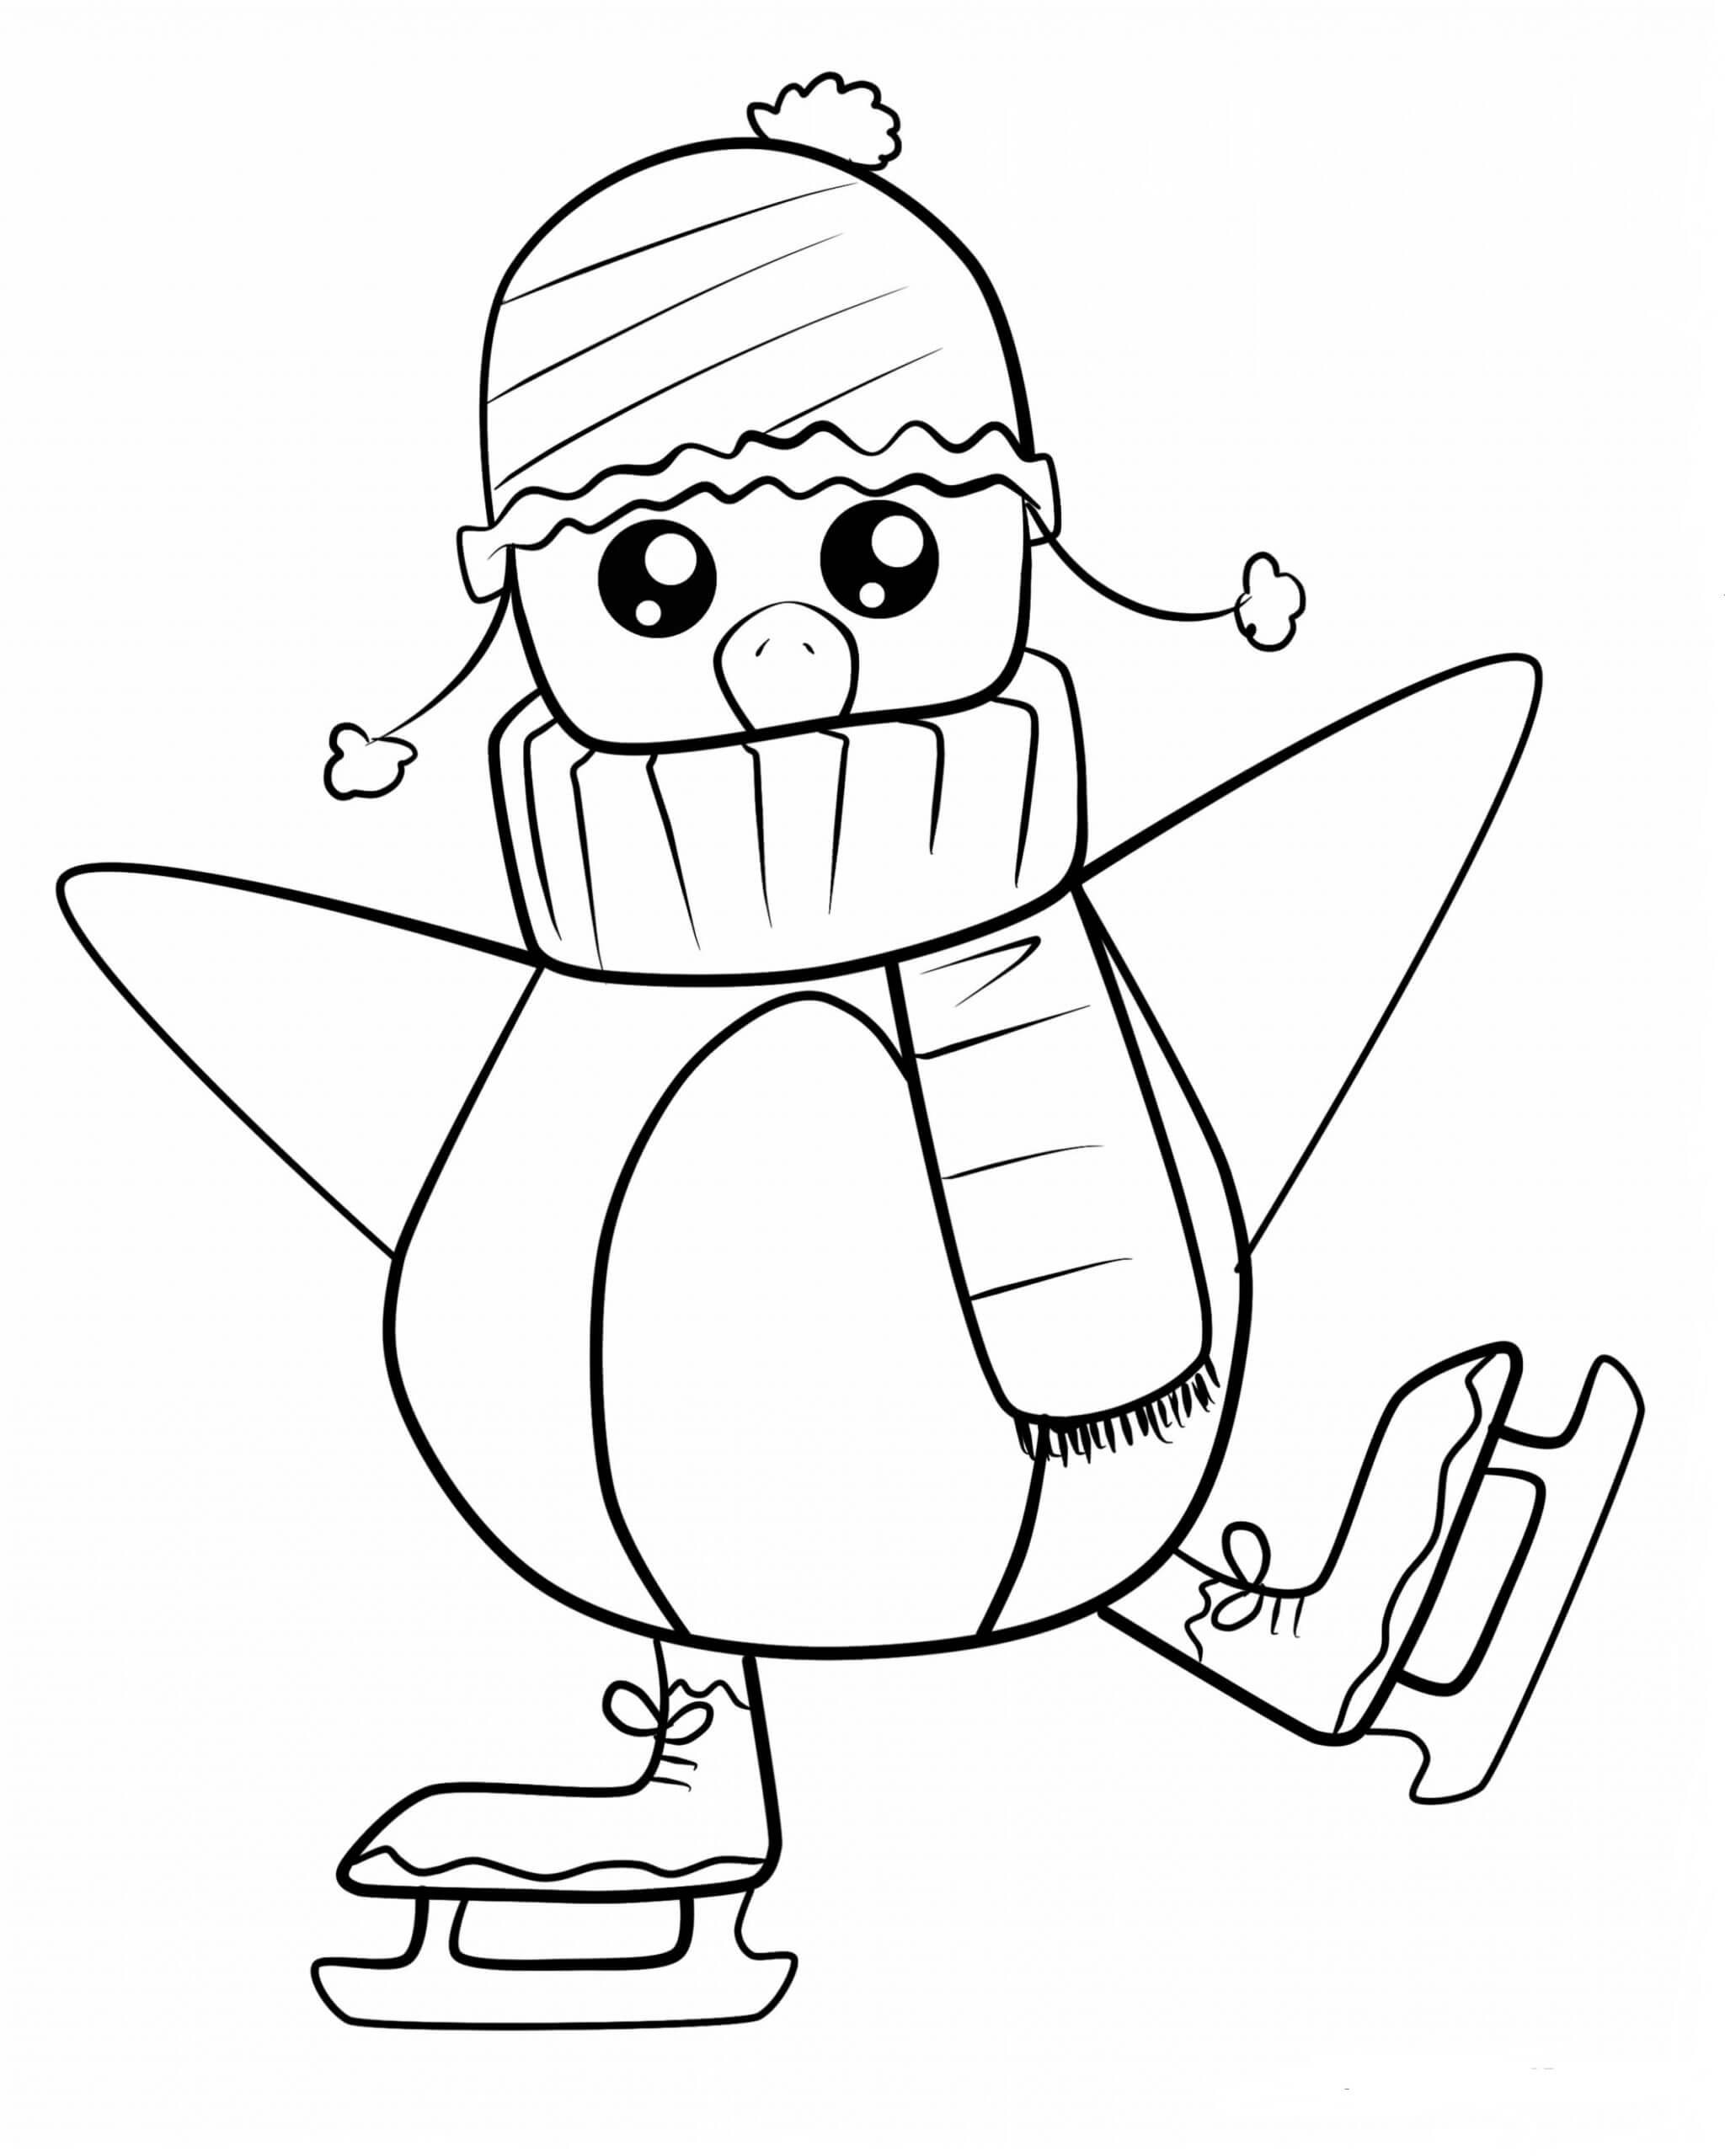 Pingouin de Noël coloring page